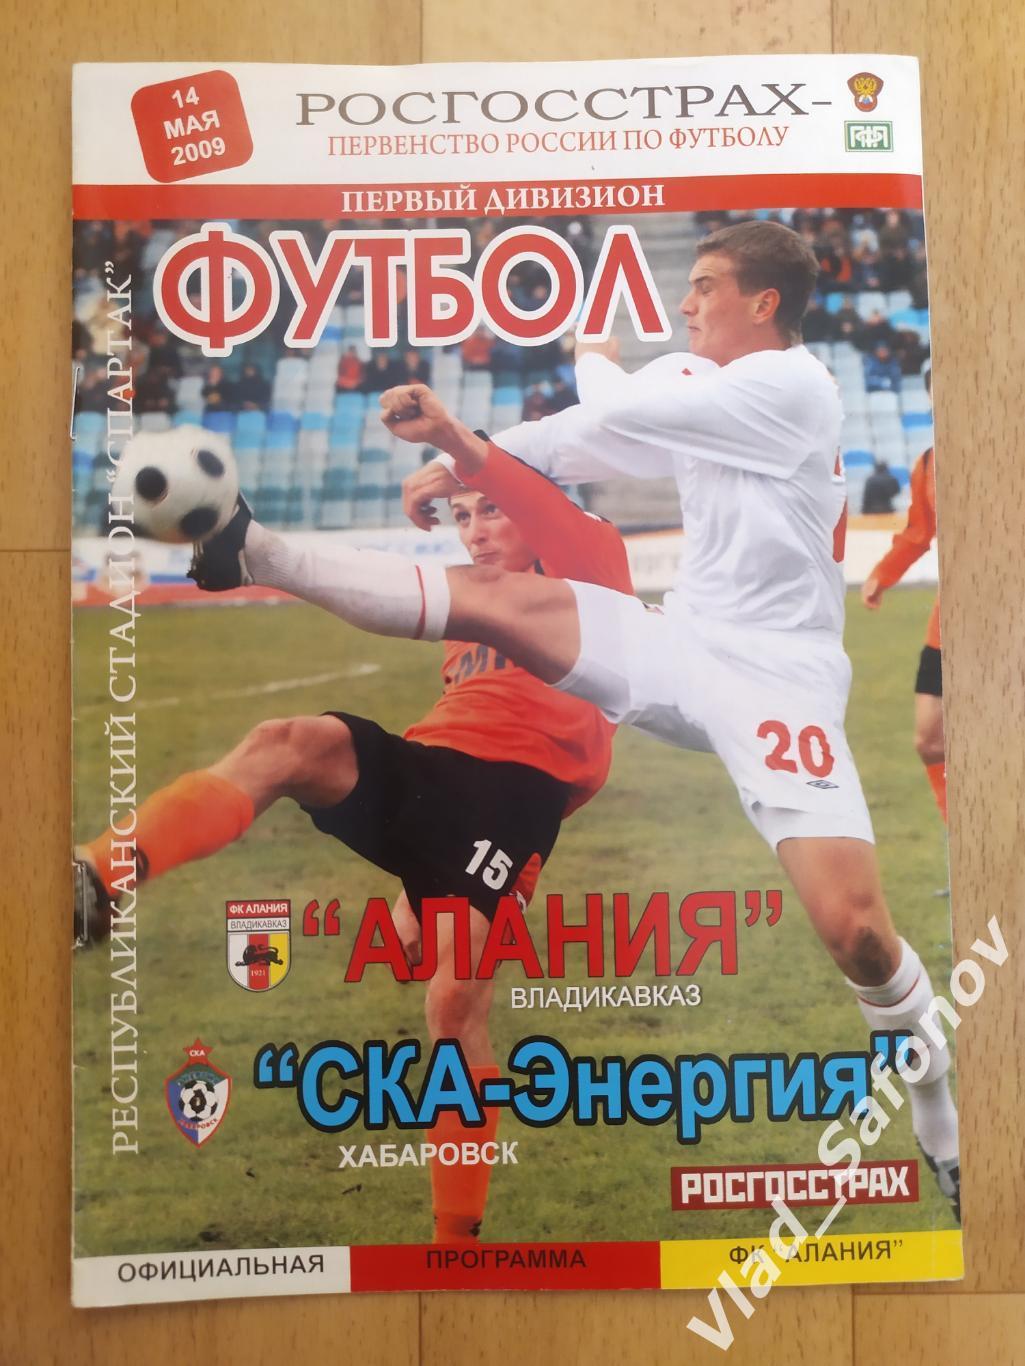 Алания(Владикавказ) - Ска(Хабаровск). 1 дивизион. 14/05/2009